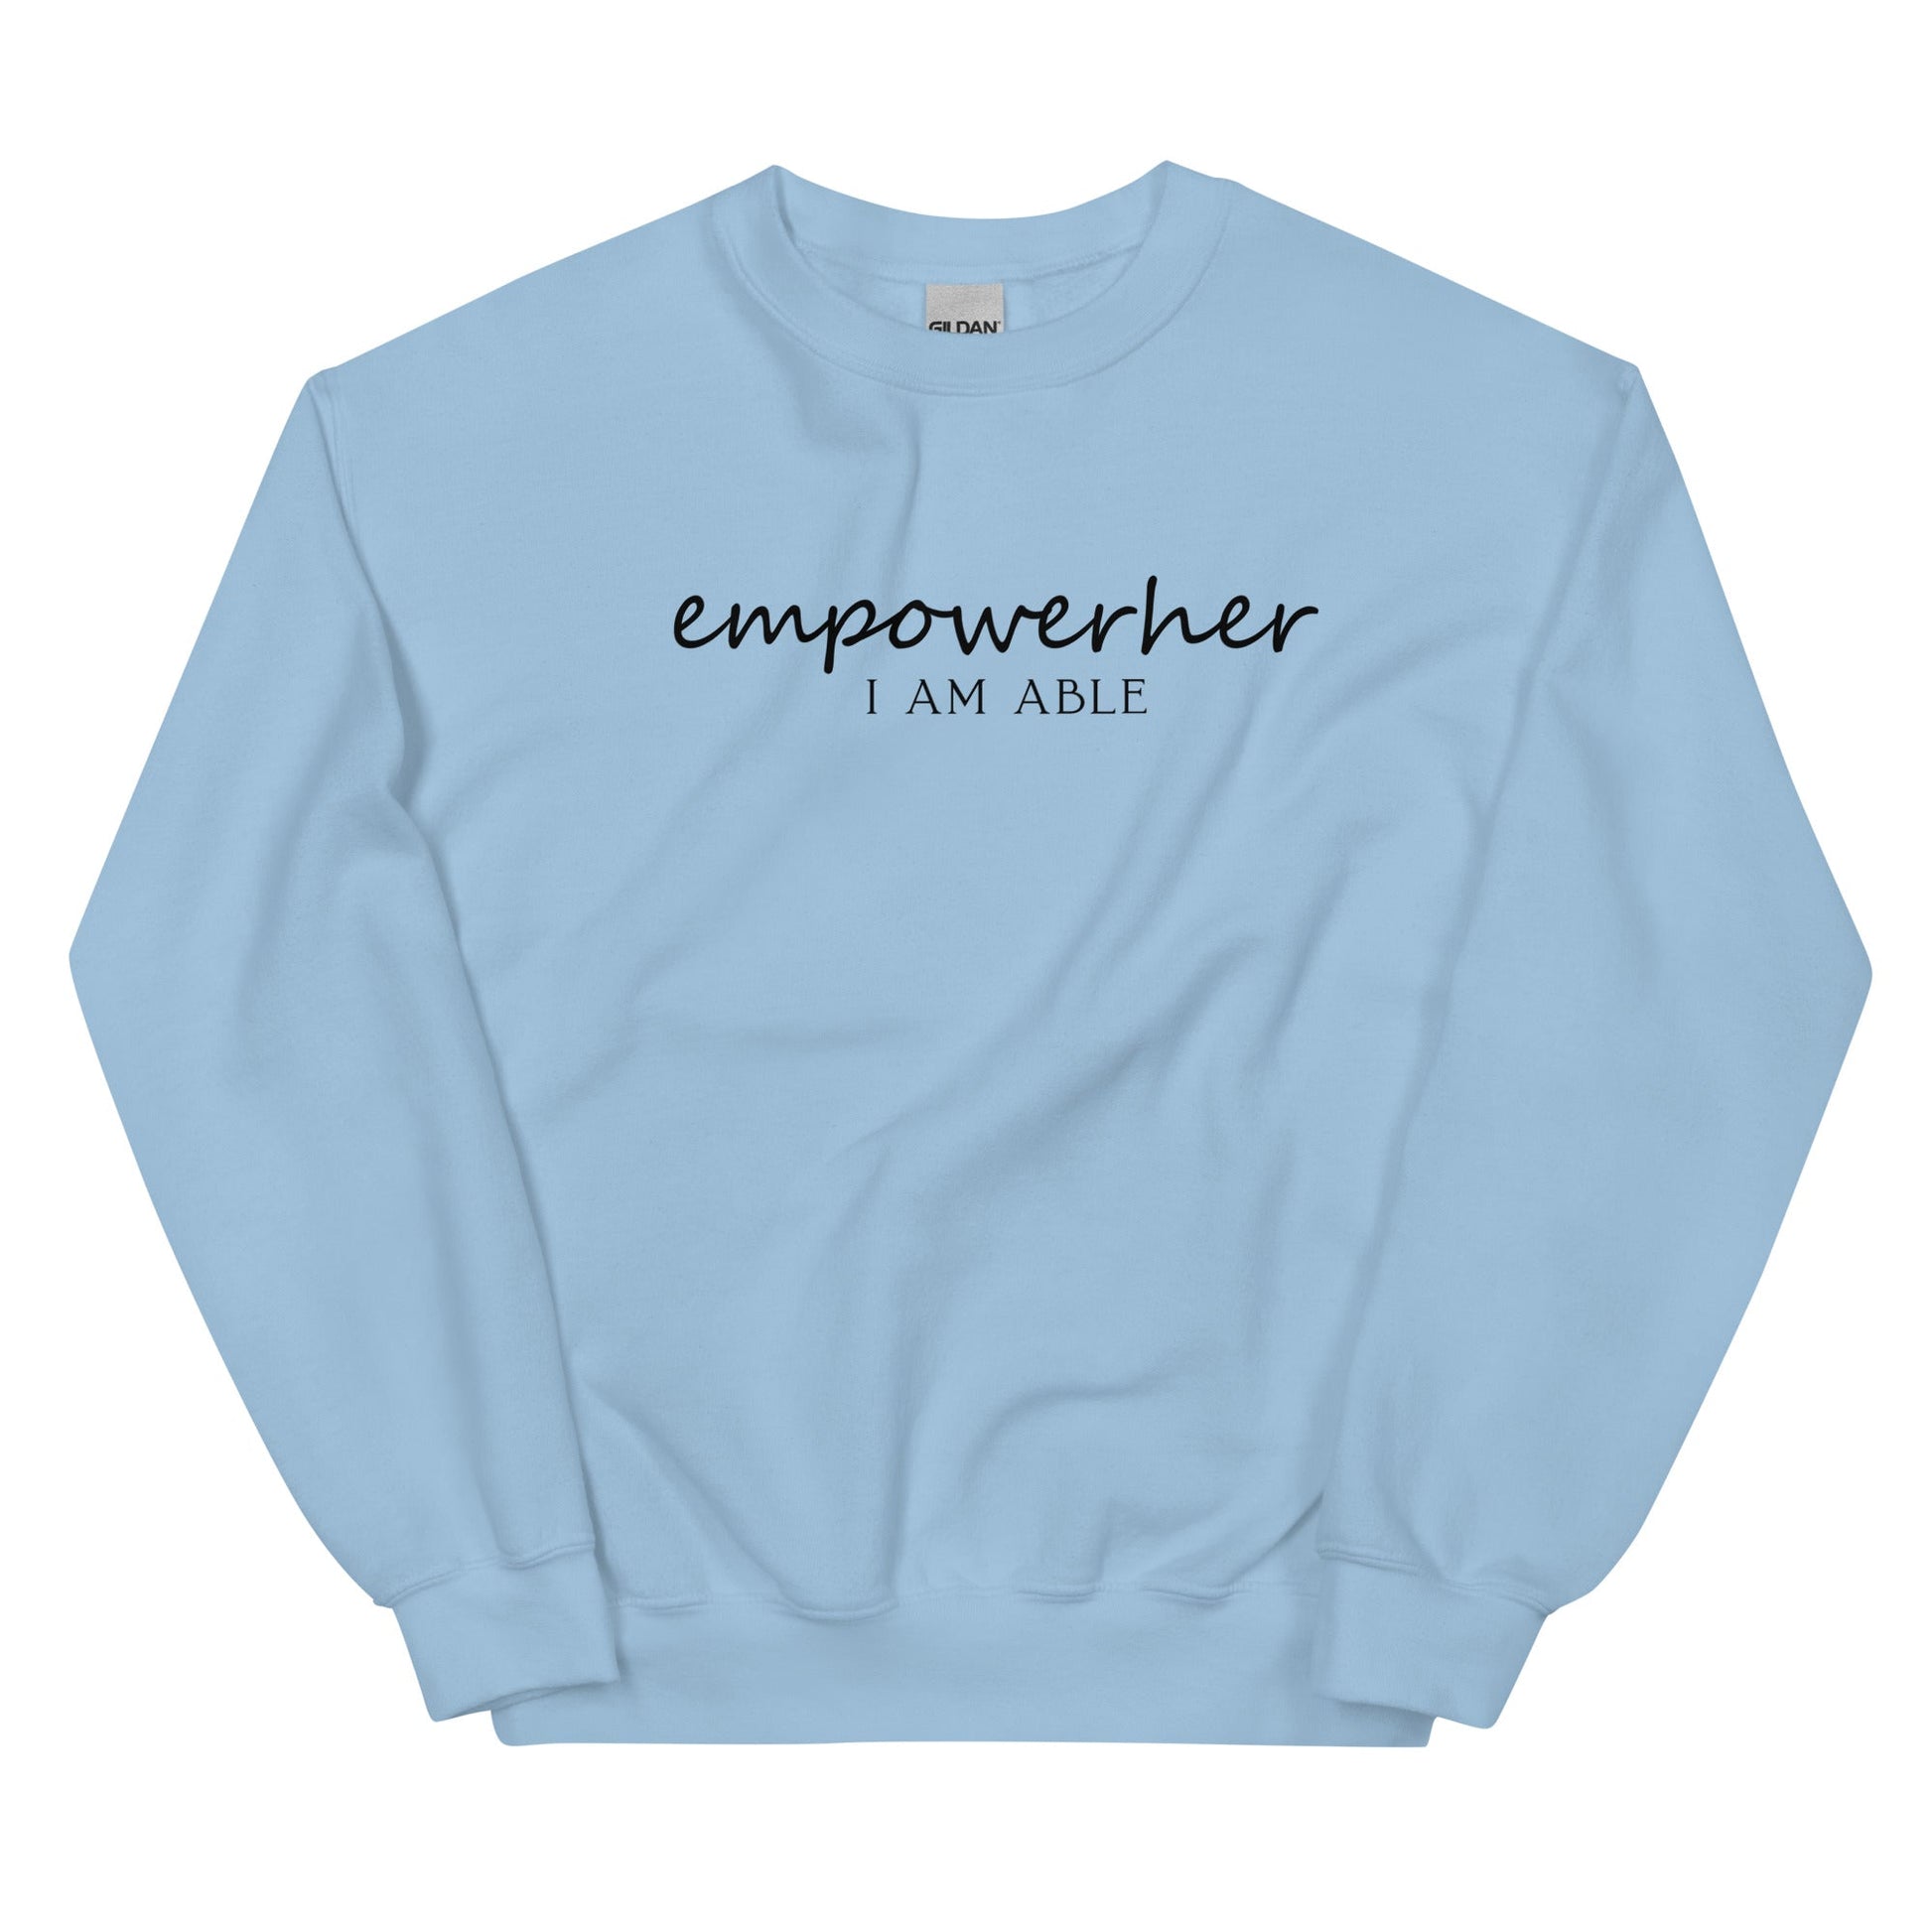 EmpowerHer I AM ABLE Sweatshirt - Light Blue / S